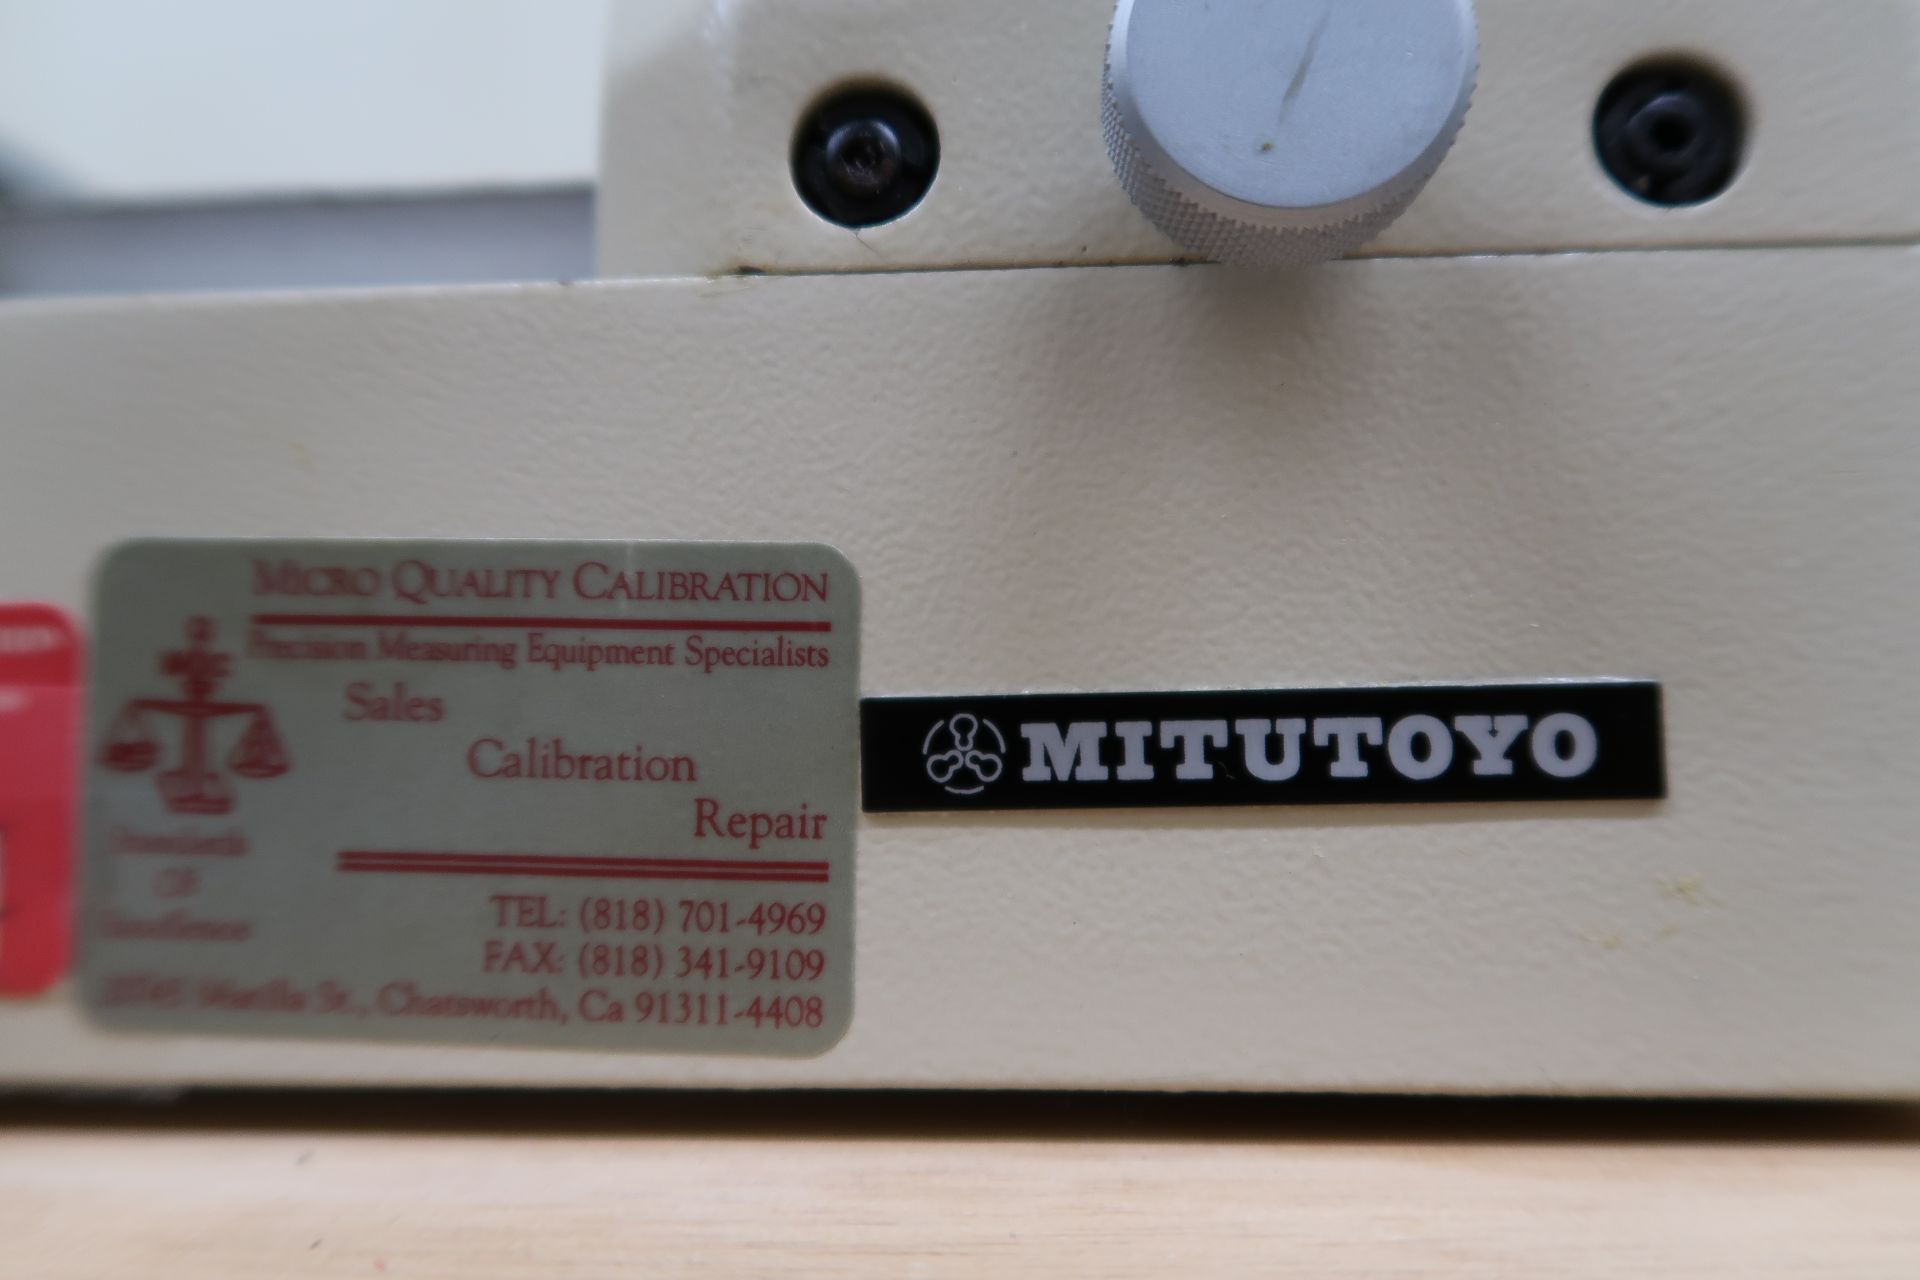 Mitutoyo mdl. 162-102 Super Bench Micrometer w/ Mitutoyo mdl. 519-605-1 Digital Display - Image 5 of 9